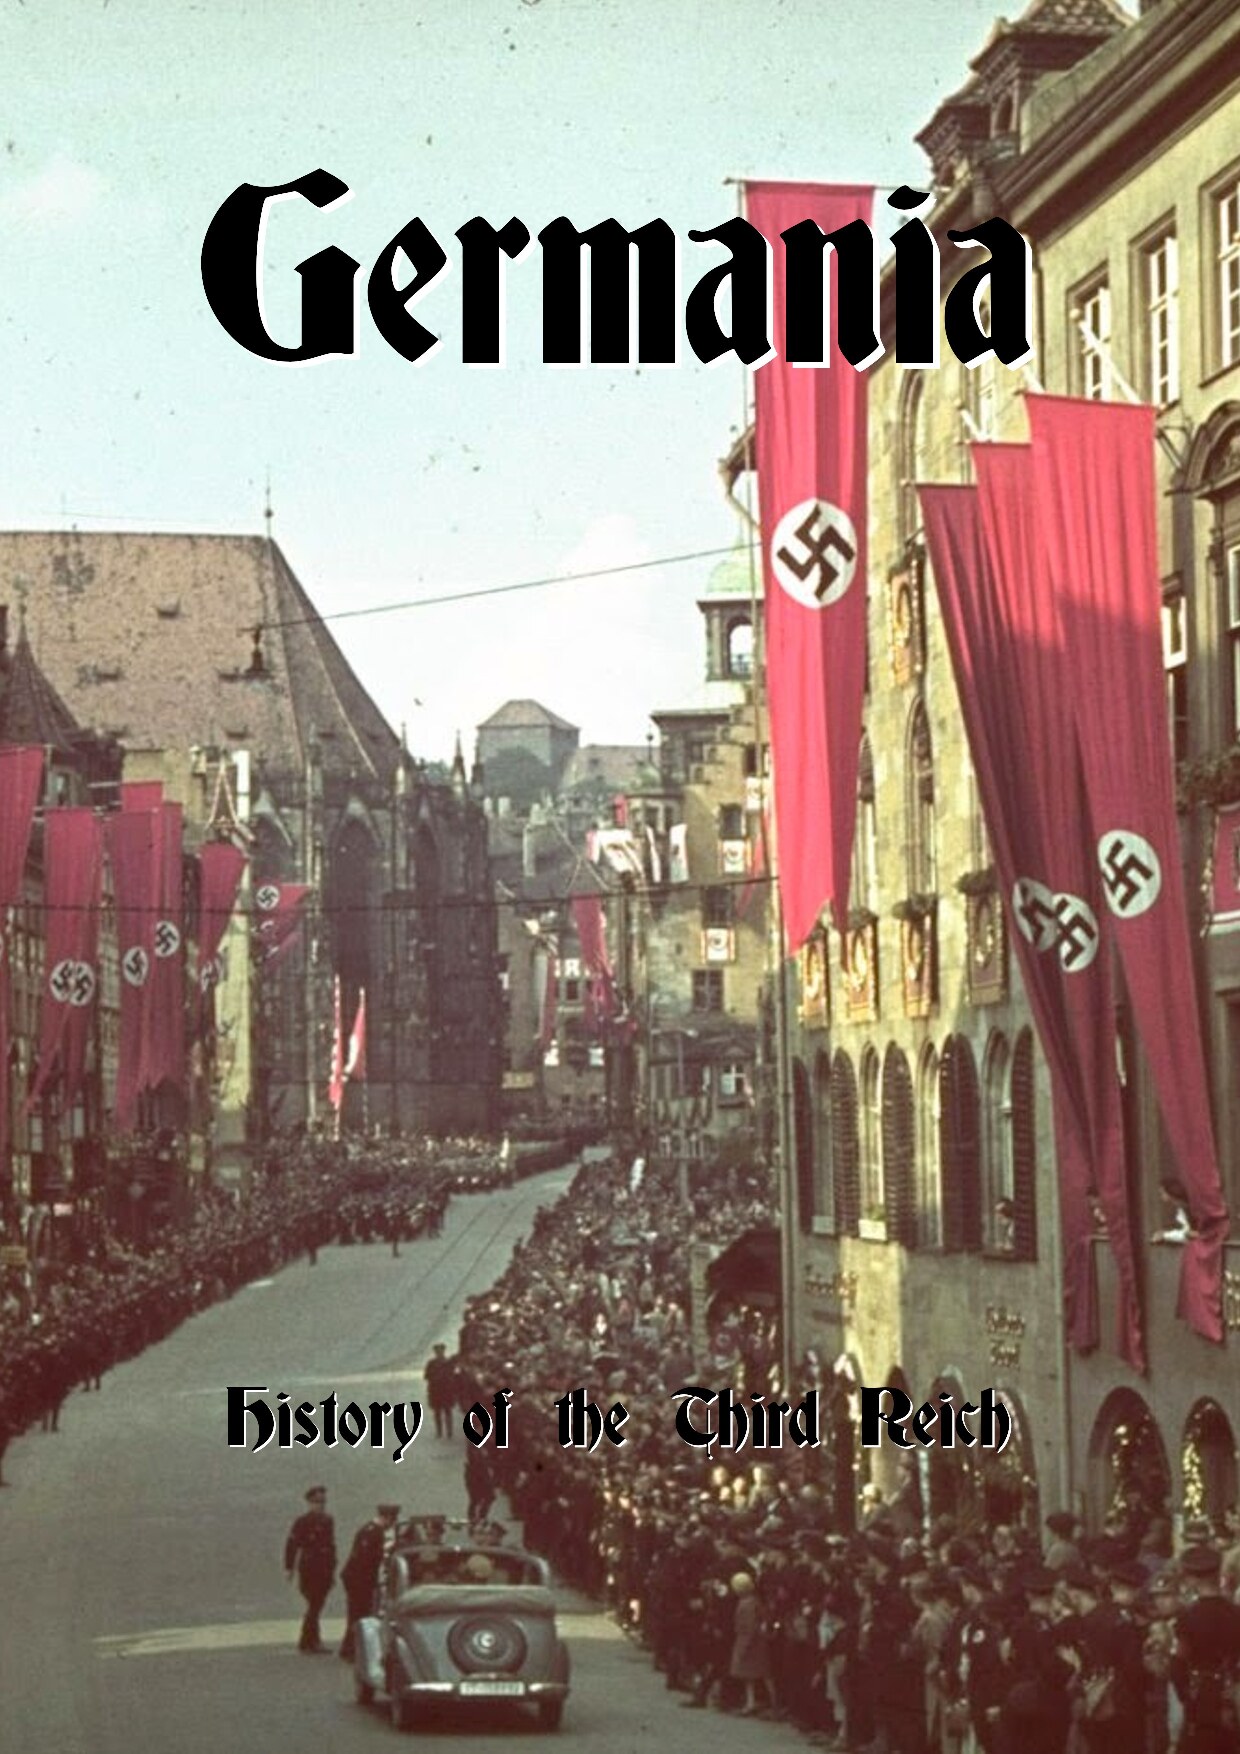 Book-Anon; Germania